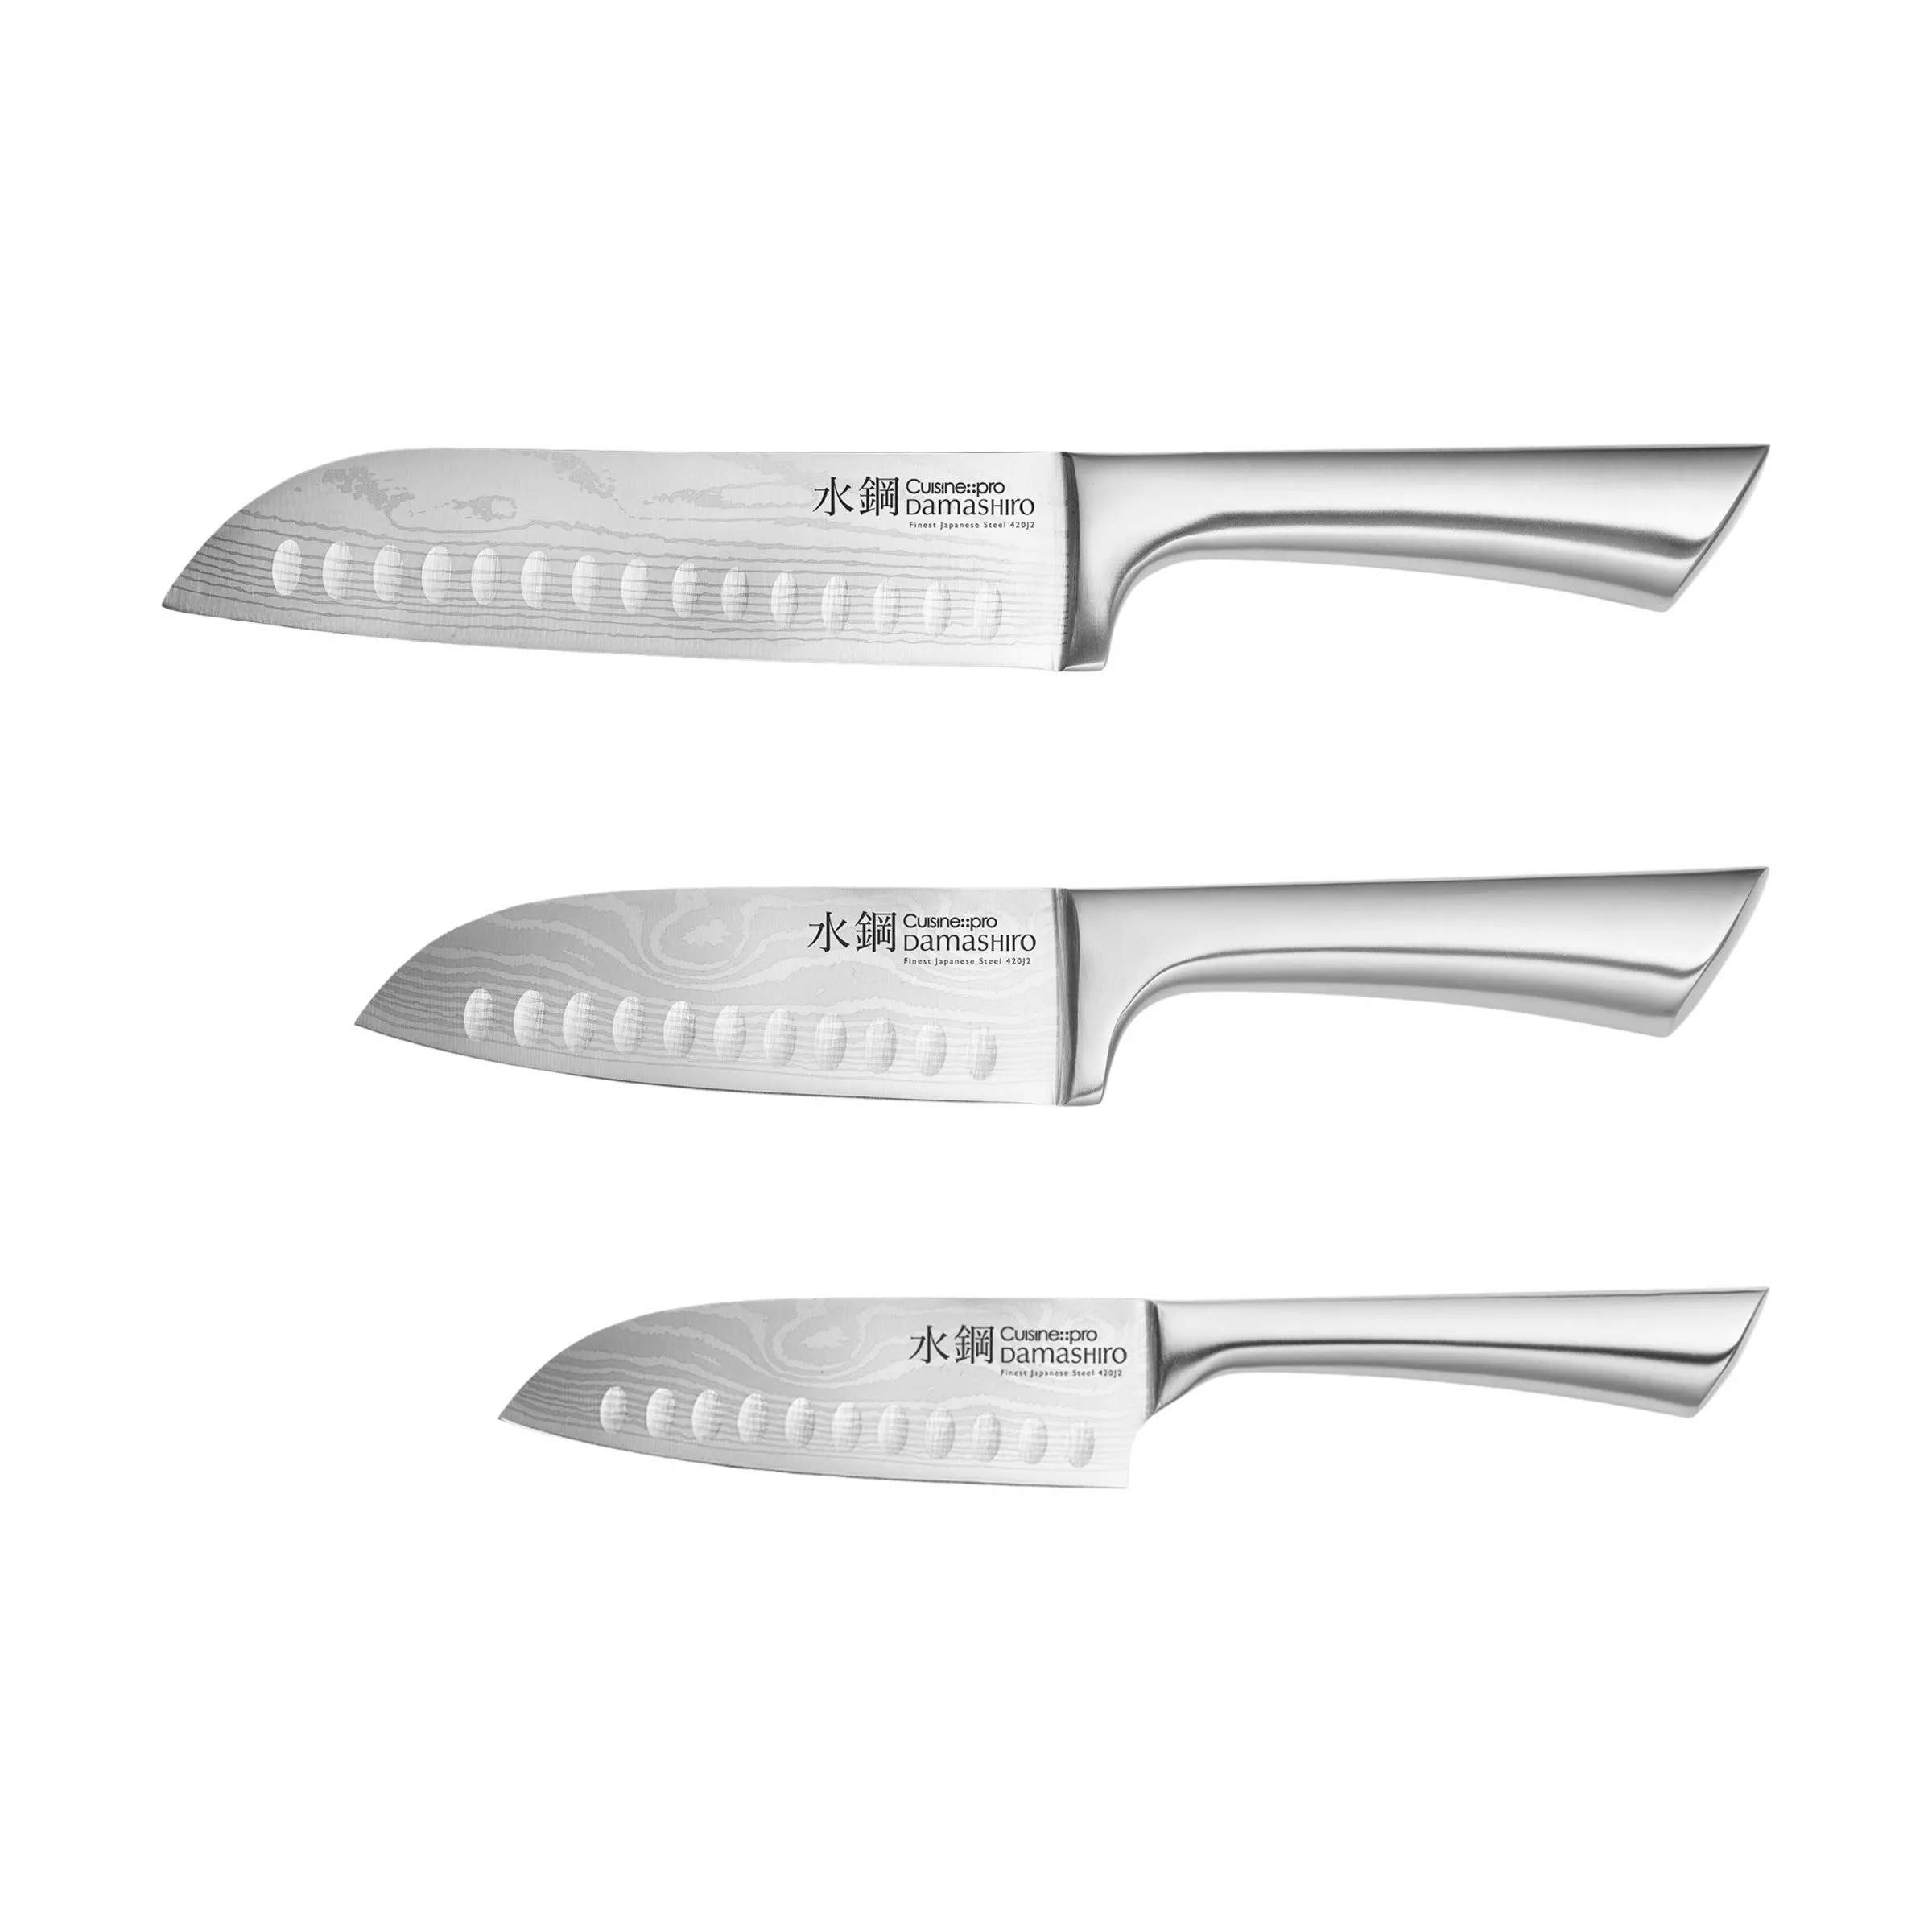 Damashiro® Santoku Knivsæt - 3 dele, sølvfarvet, large